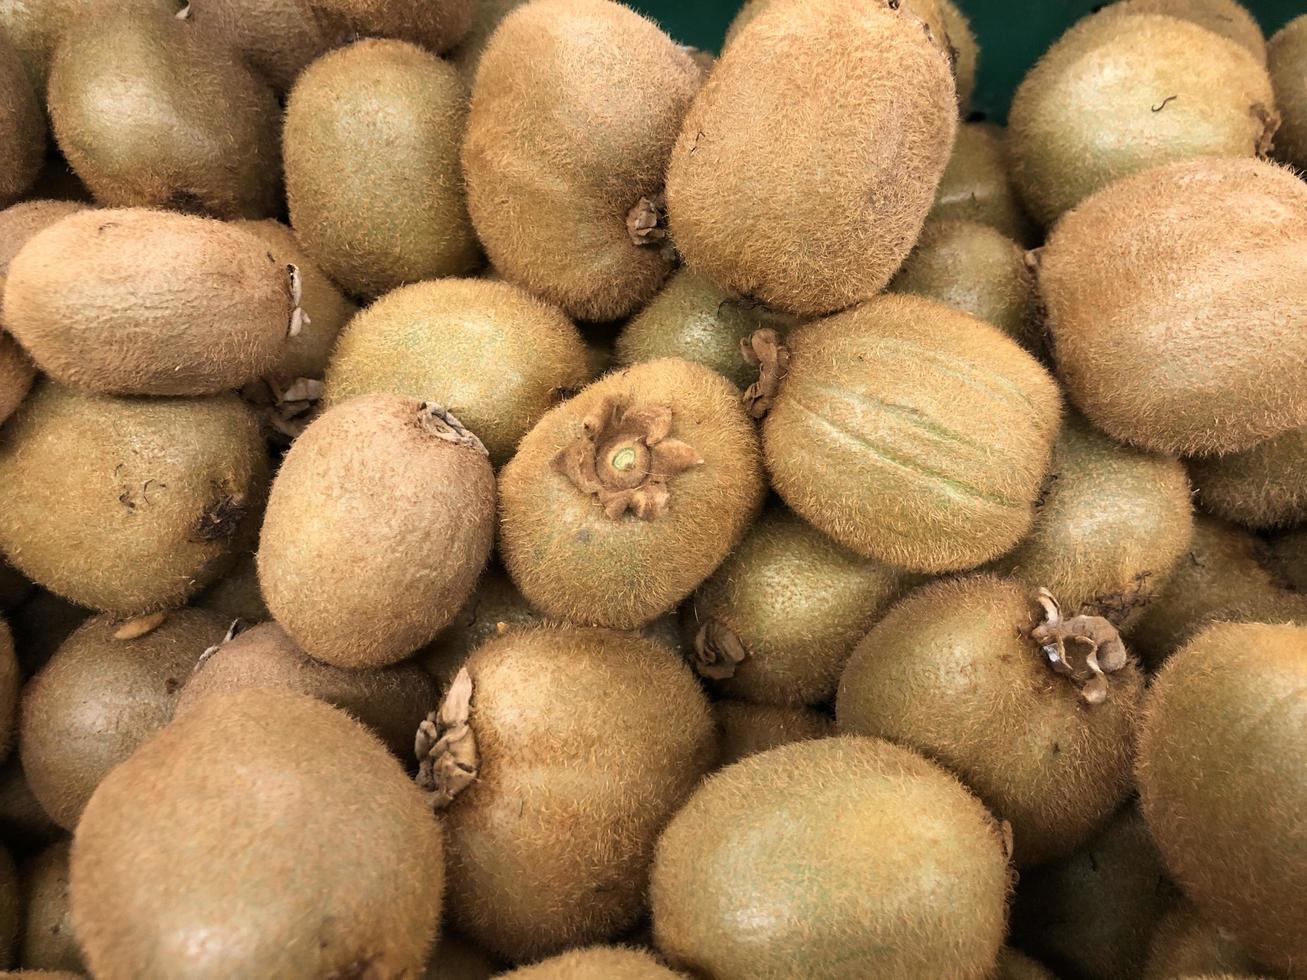 makro foto kiwifrukter. Arkivfoto frukt kiwi bakgrund